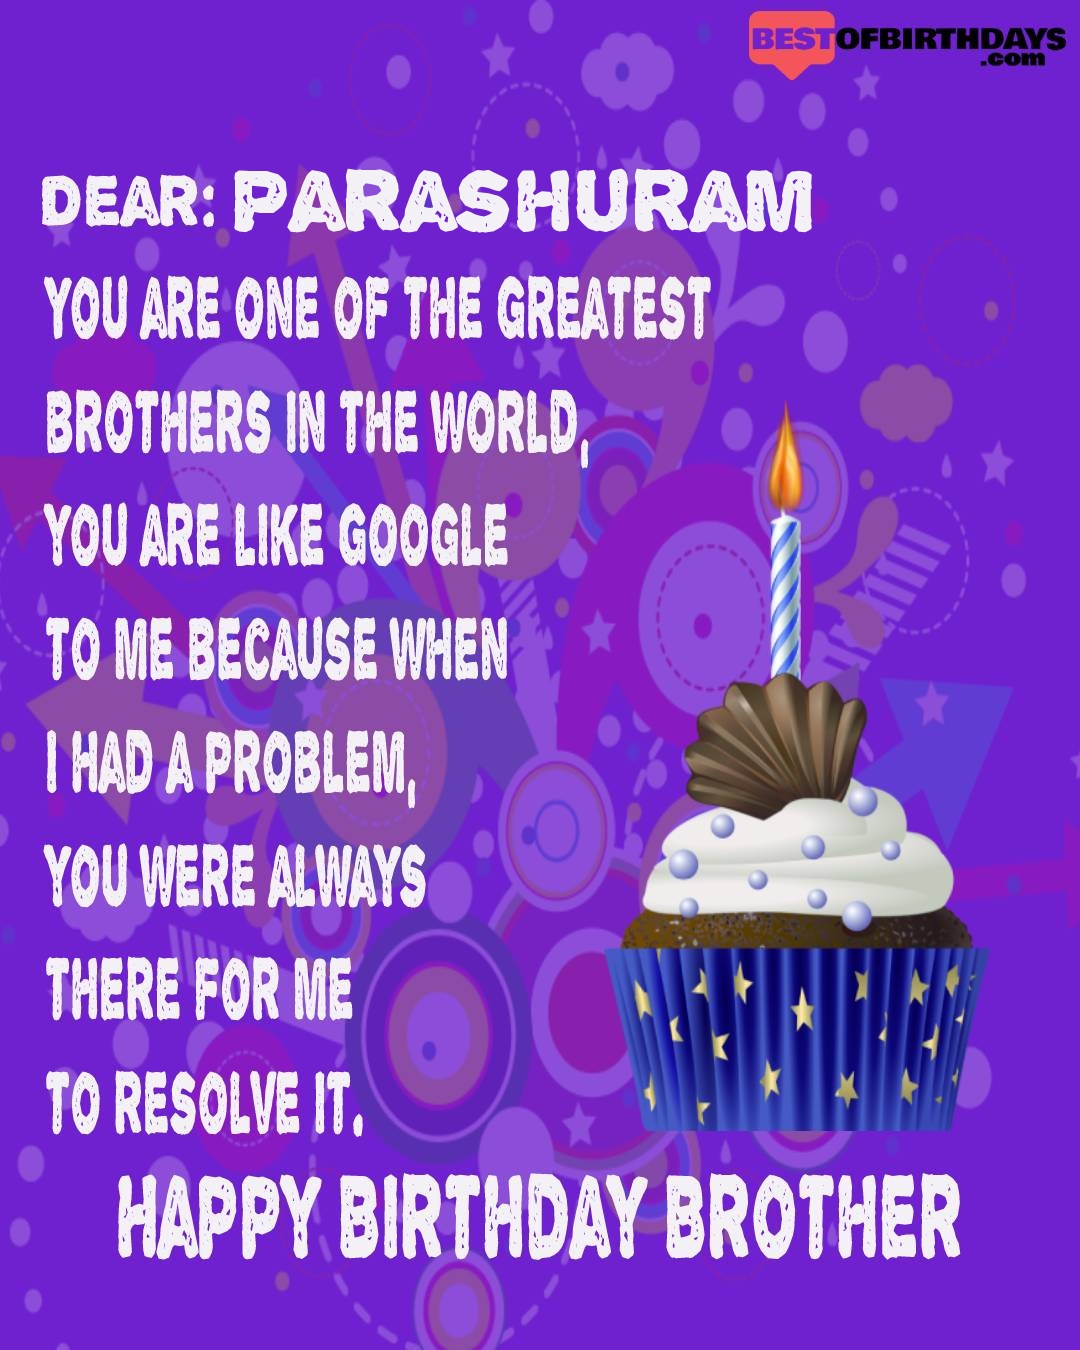 Happy birthday parashuram bhai brother bro